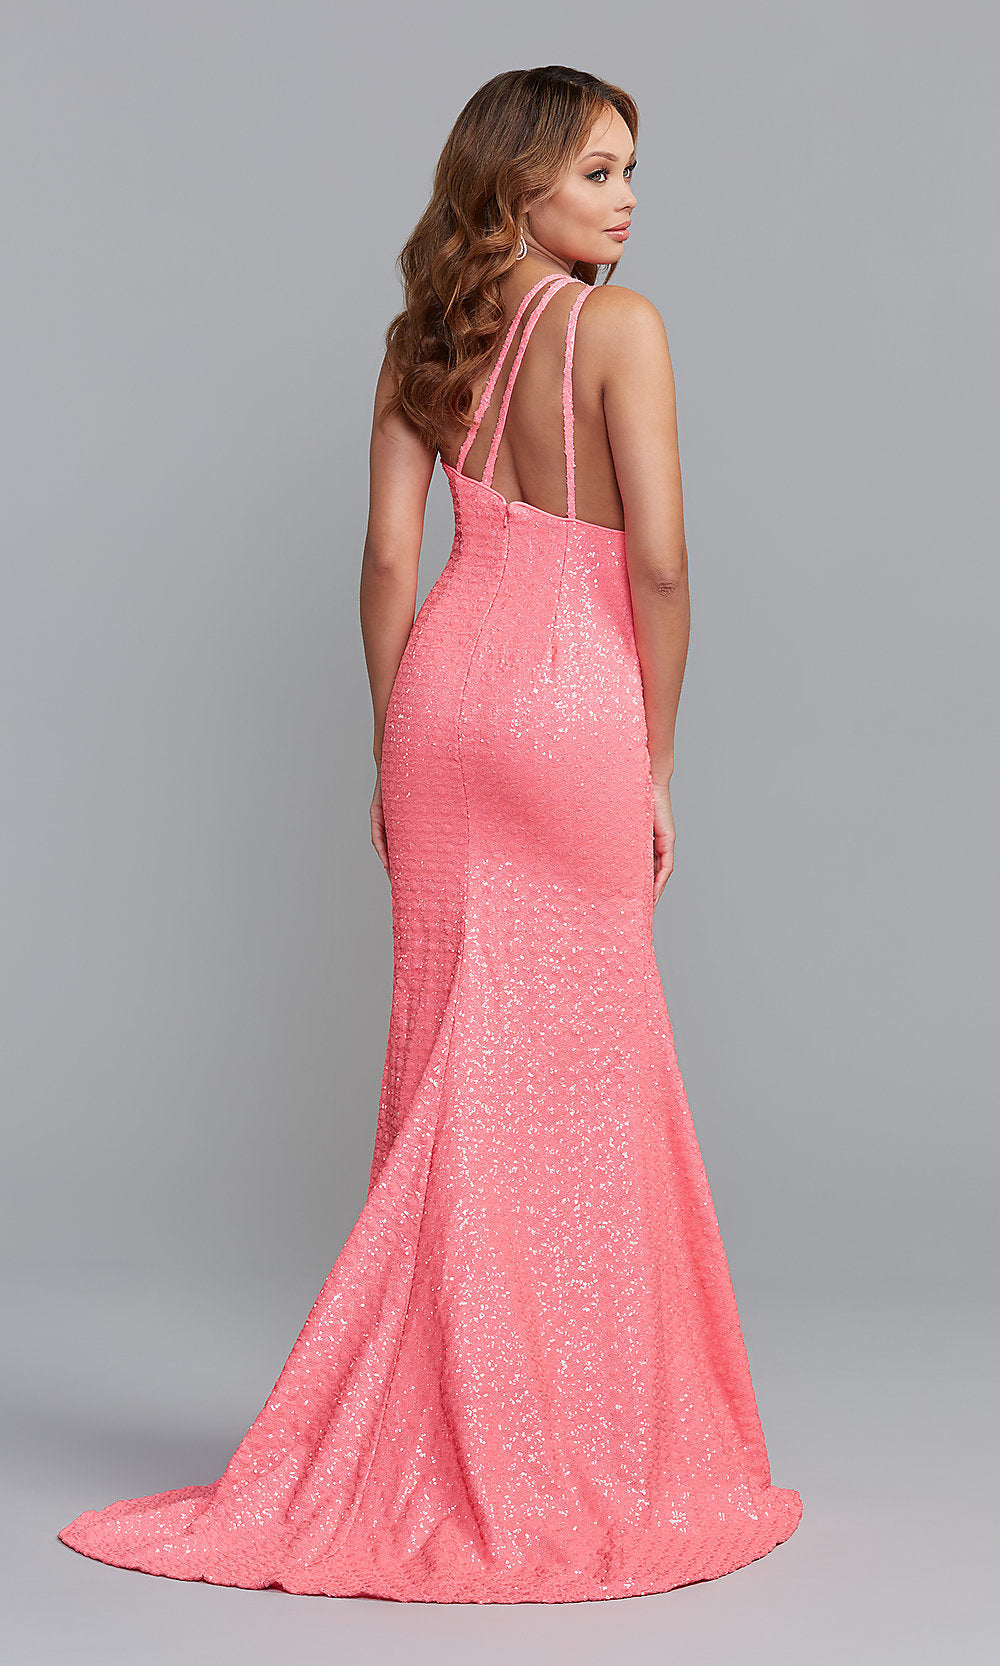 One-Shoulder Neon Pink Long Prom Dress - PromGirl